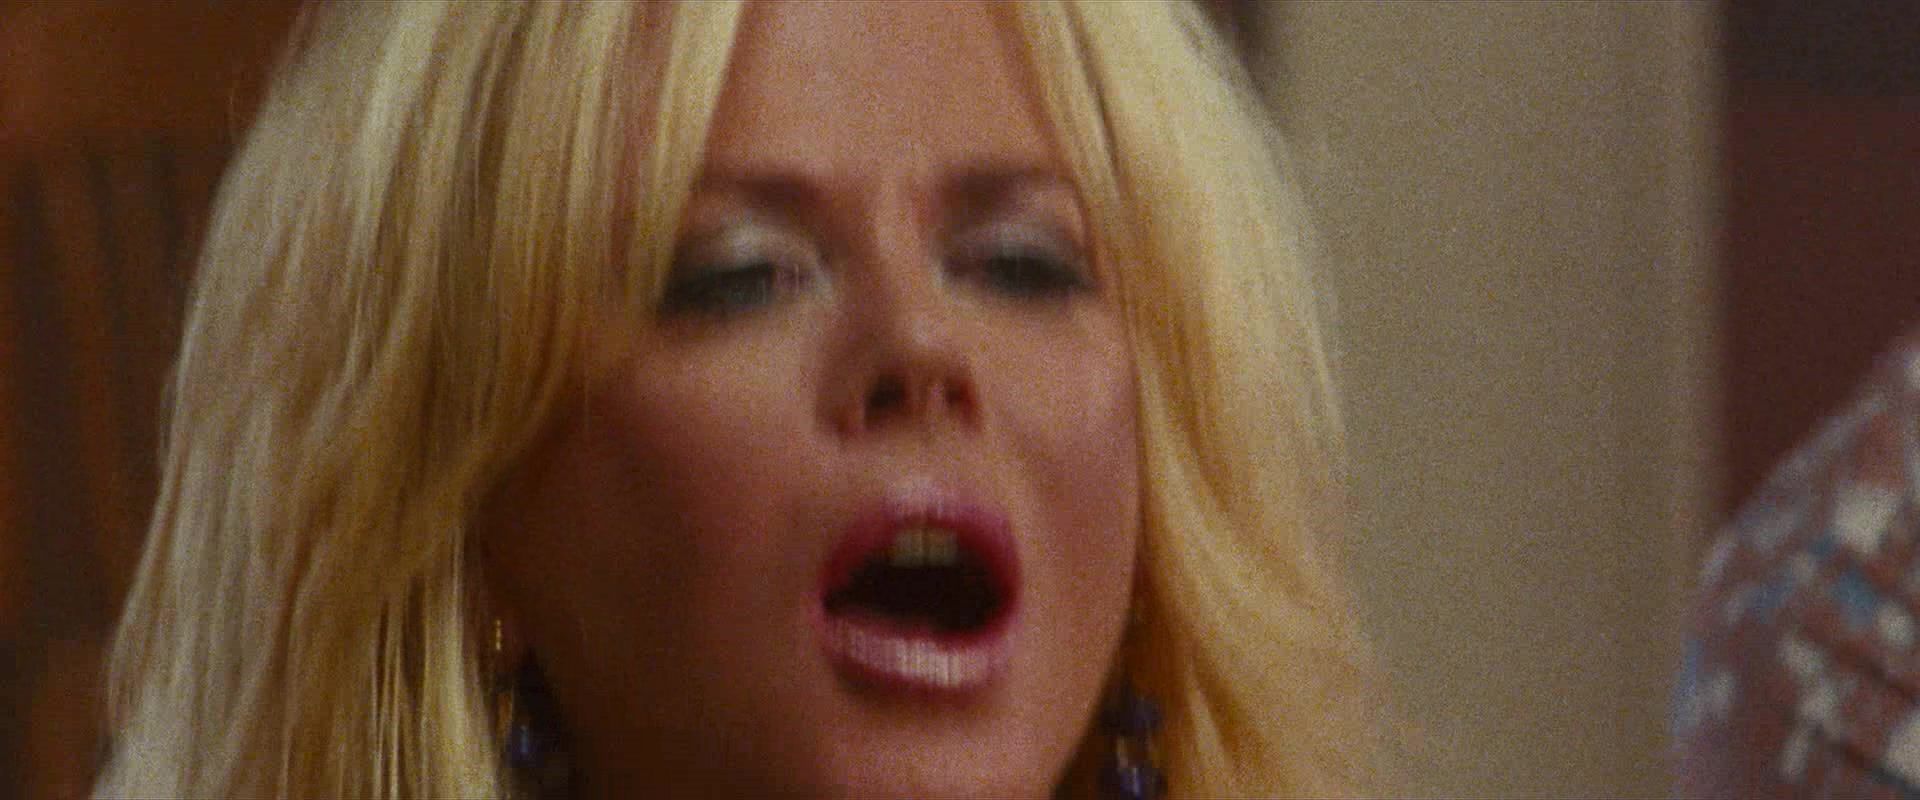 Bucetuda Hollywood hot scene Nicole Kidman - The Paperboy (2012) Uncensored - 2